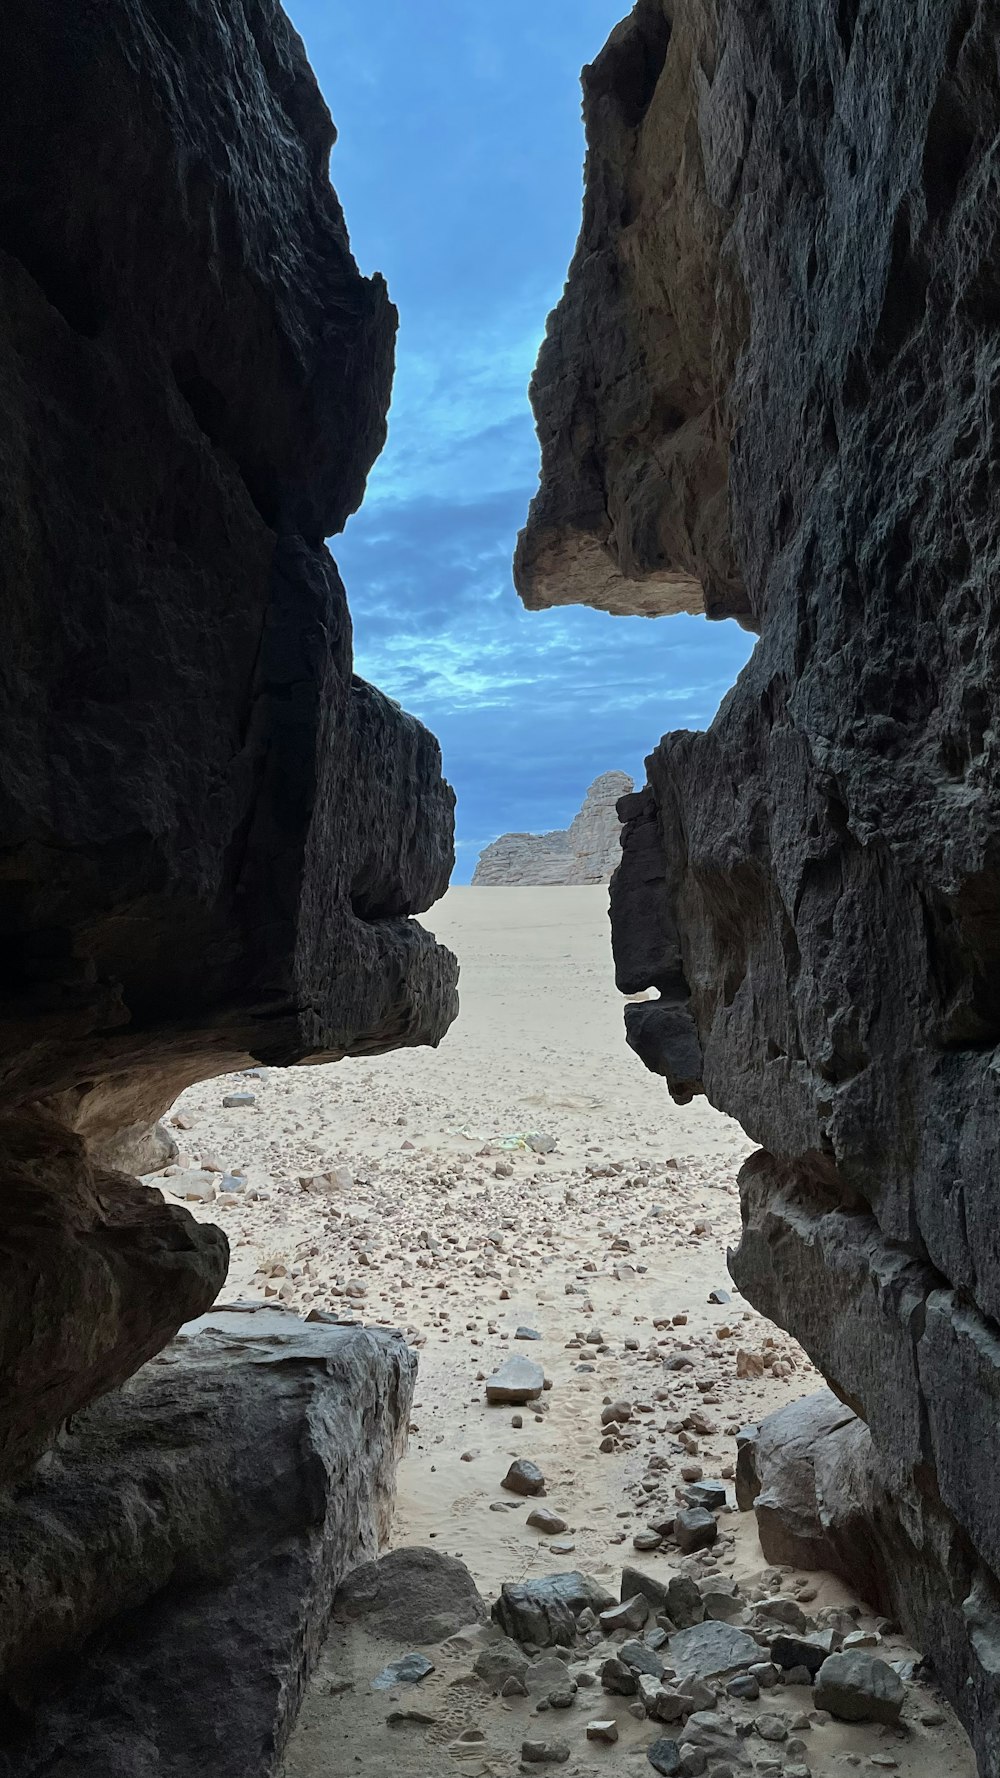 a view of a sandy beach through two rocks